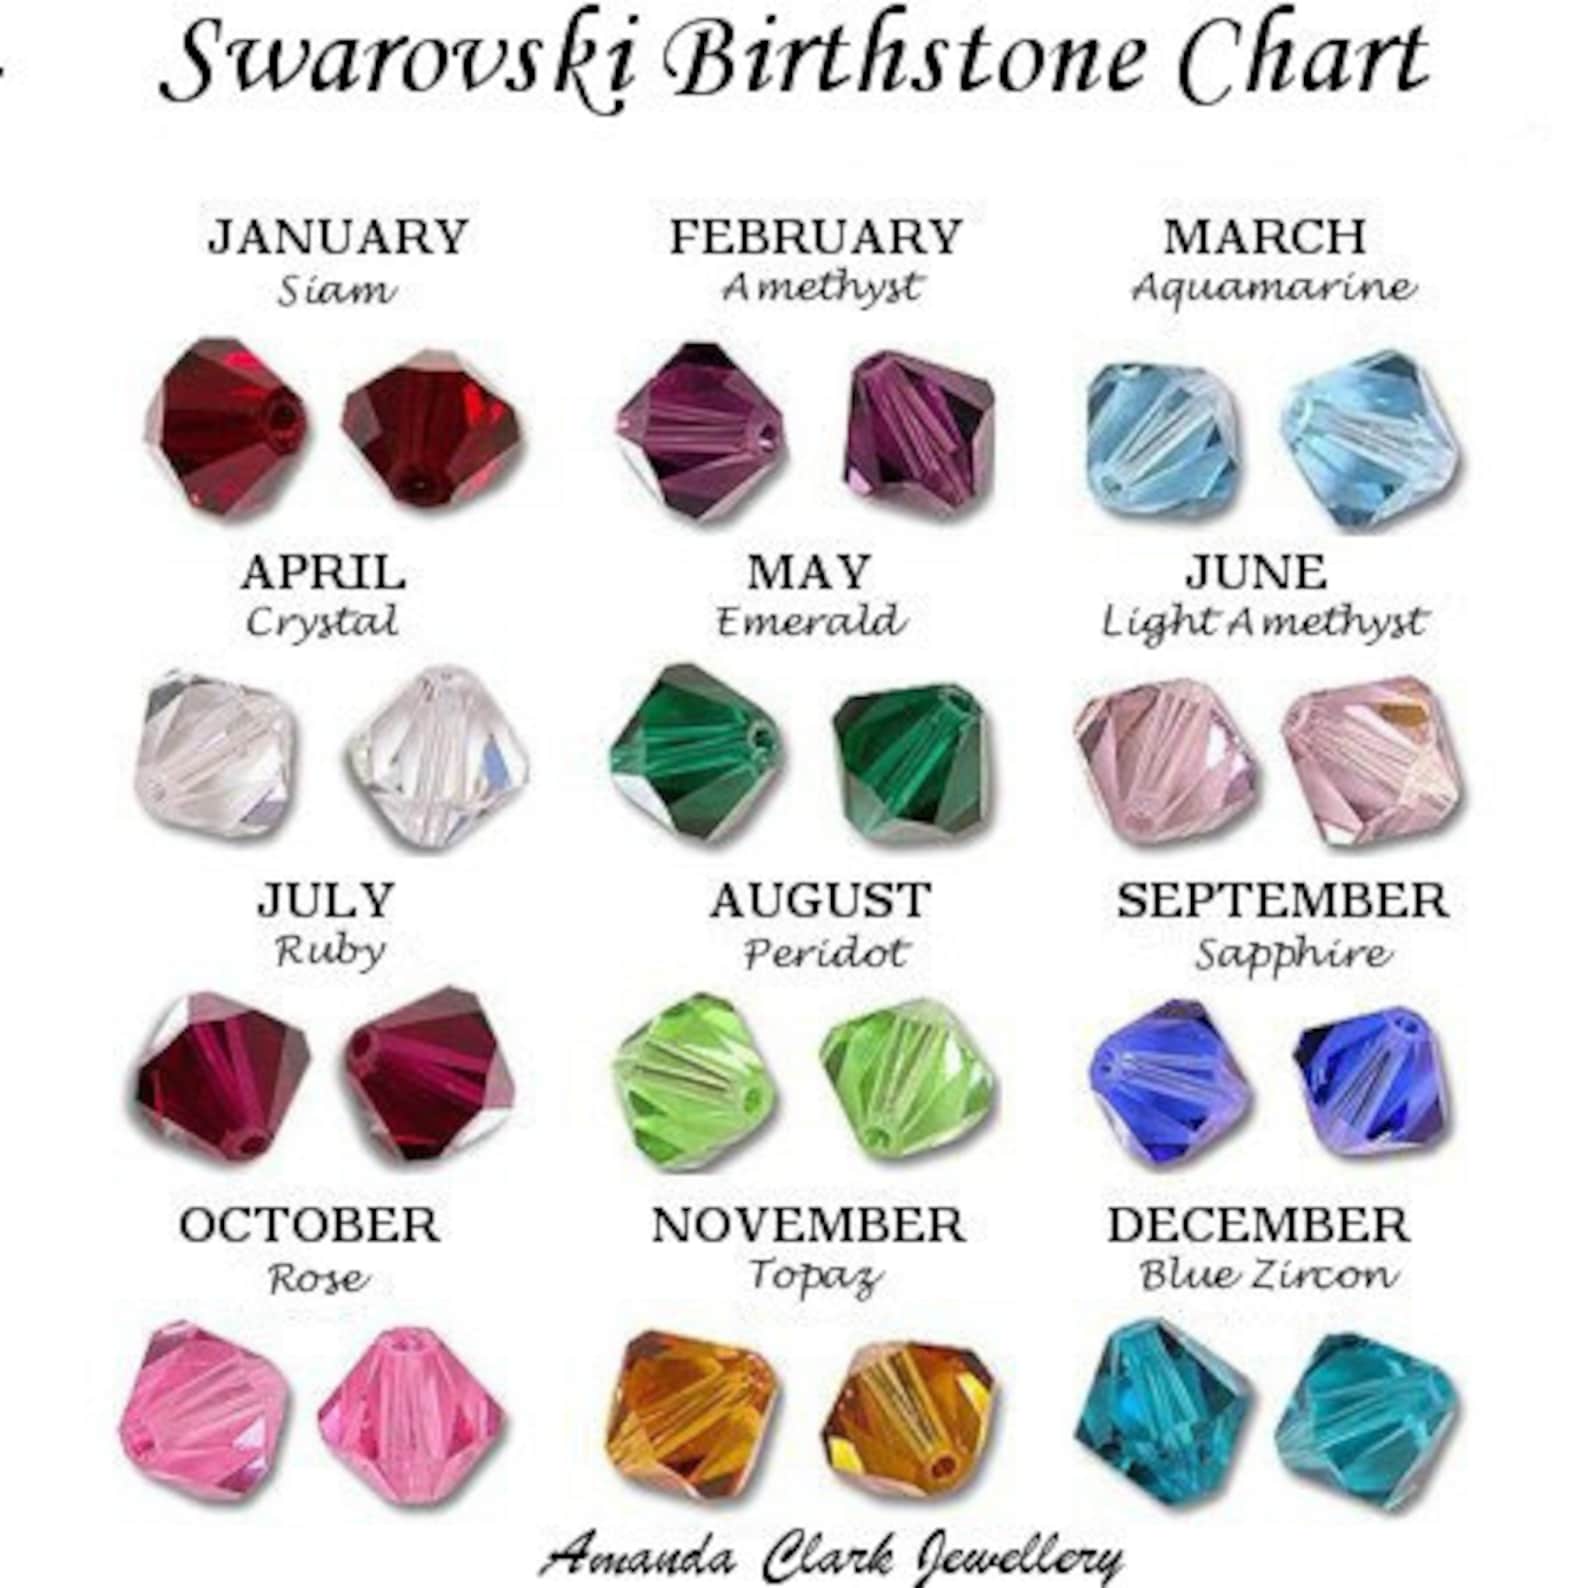 birthstone ballet shoes swarovski crystal pendant | flower girl necklace | bridesmaid pendant | ballet shoes necklace | birthsto